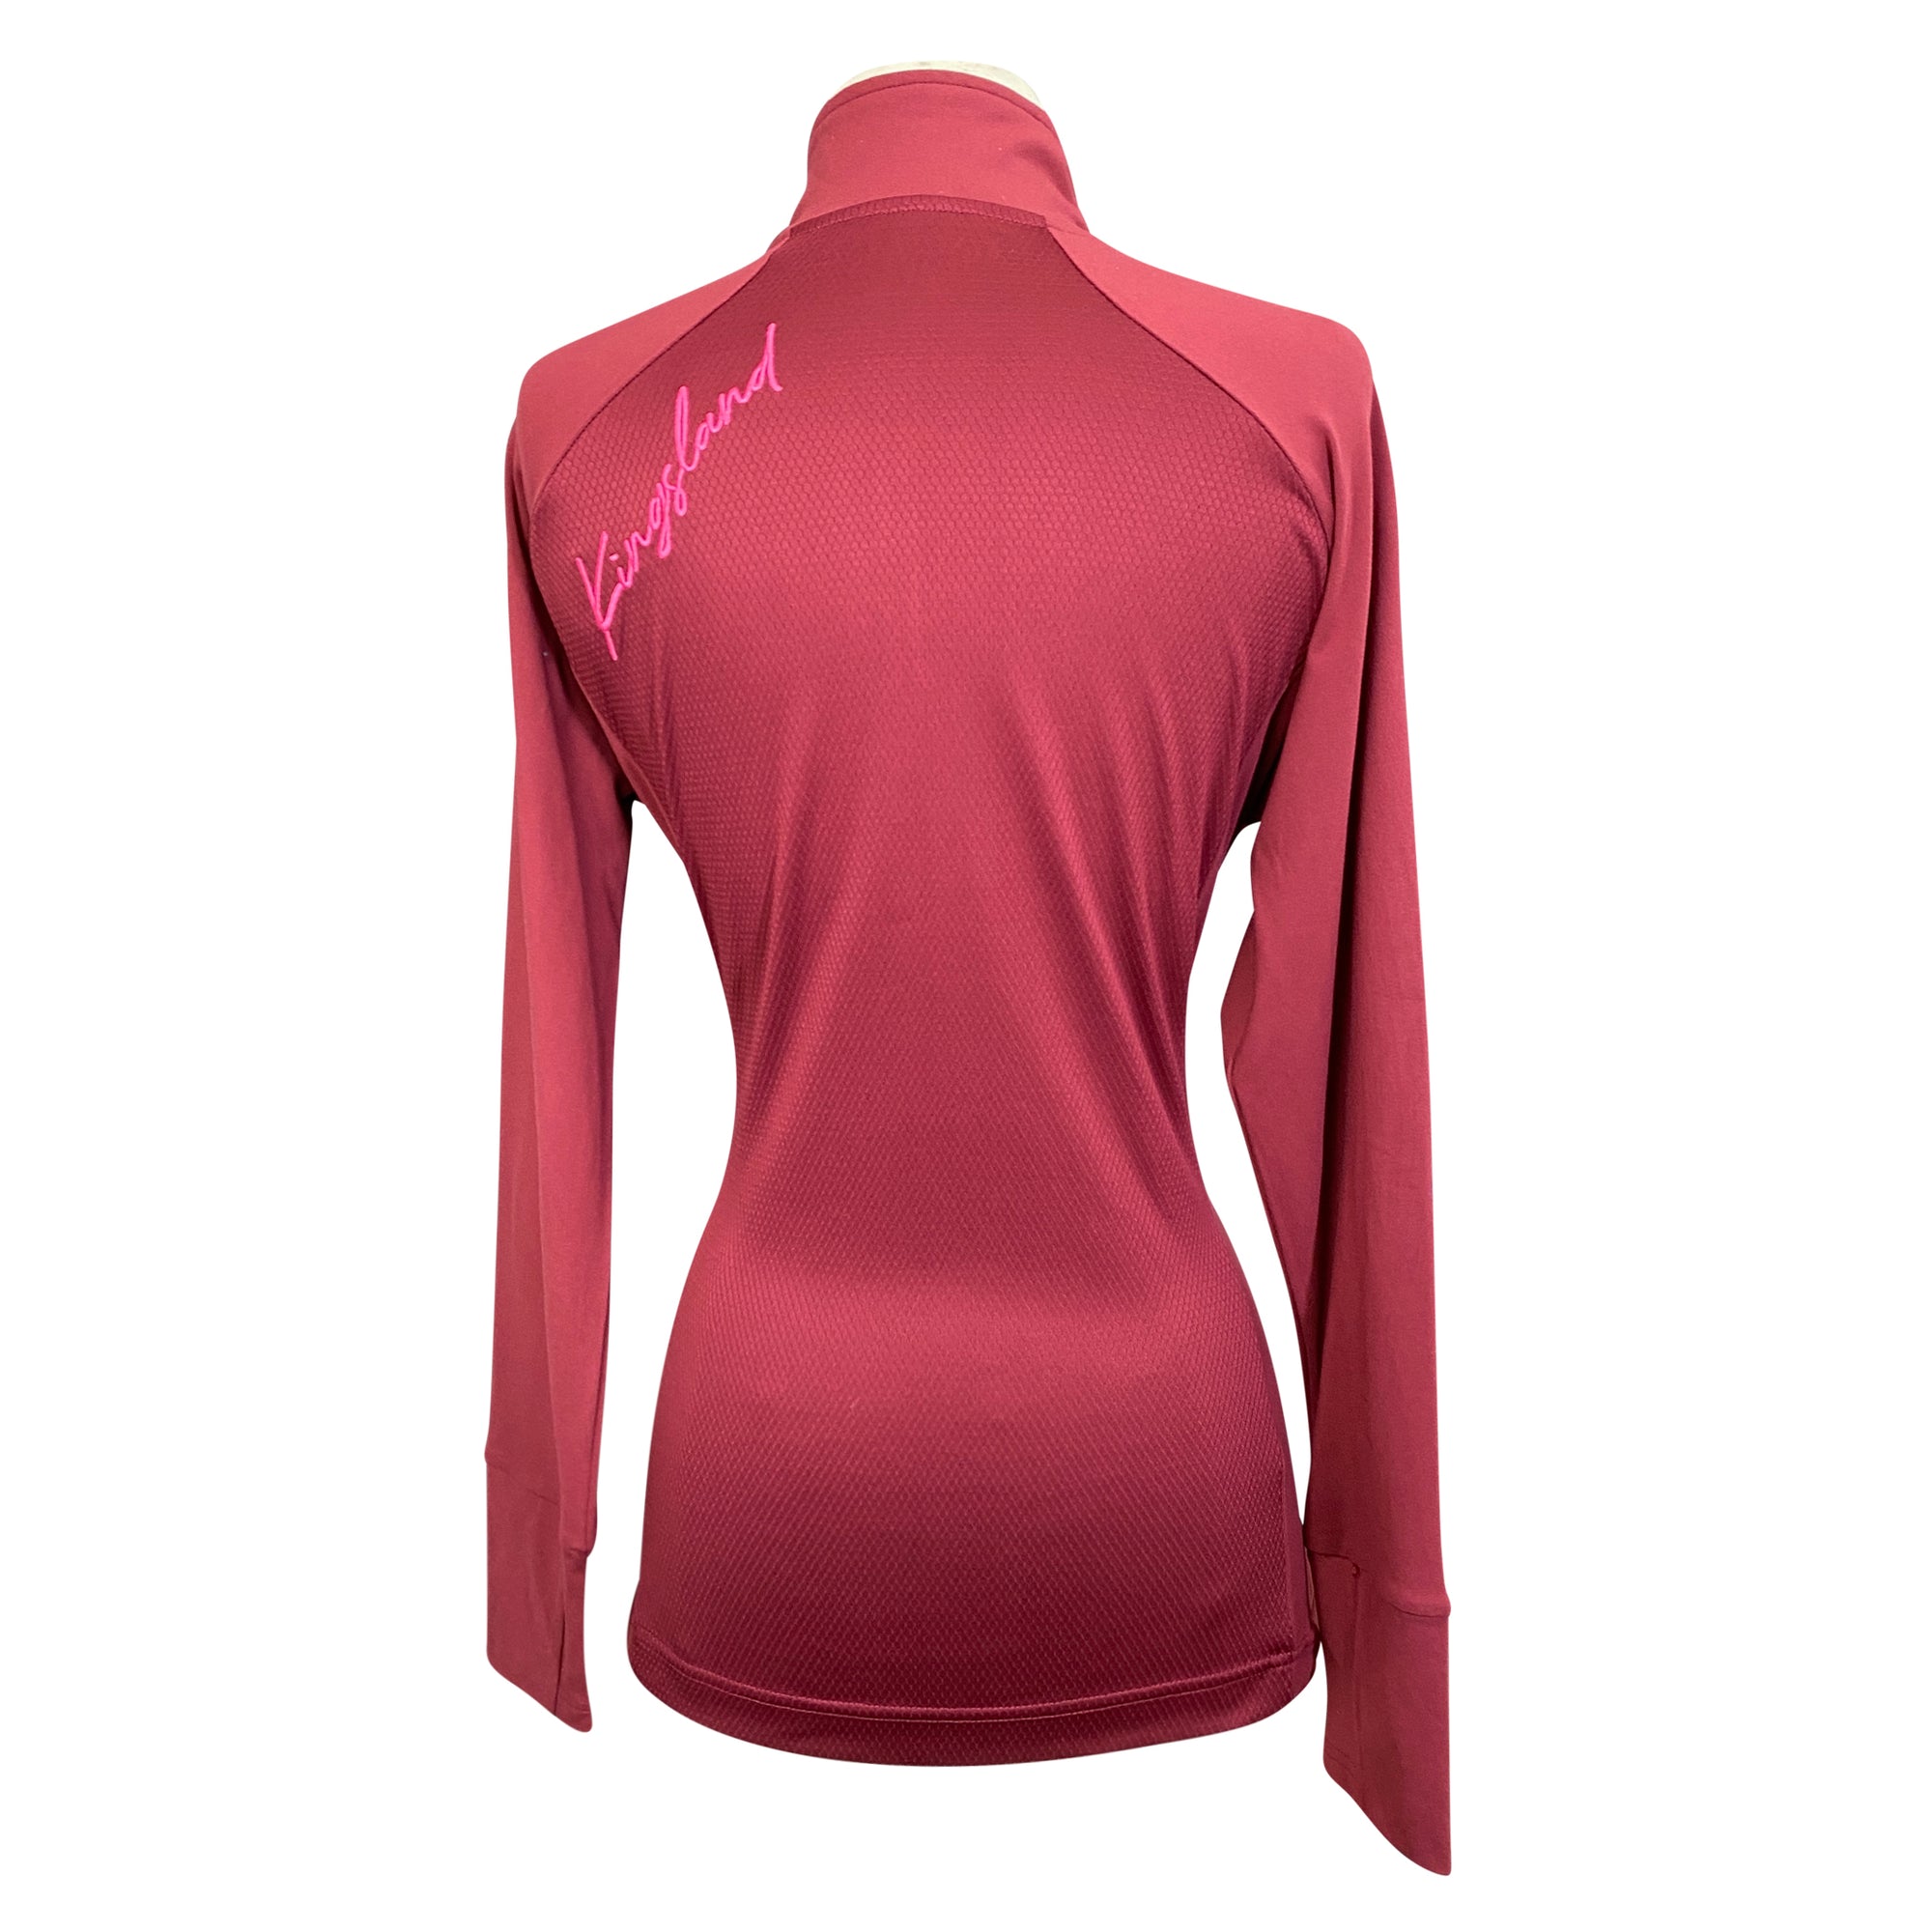 Kingsland 'Oksana' 1/4 Zip Shirt in Burgundy/Pink